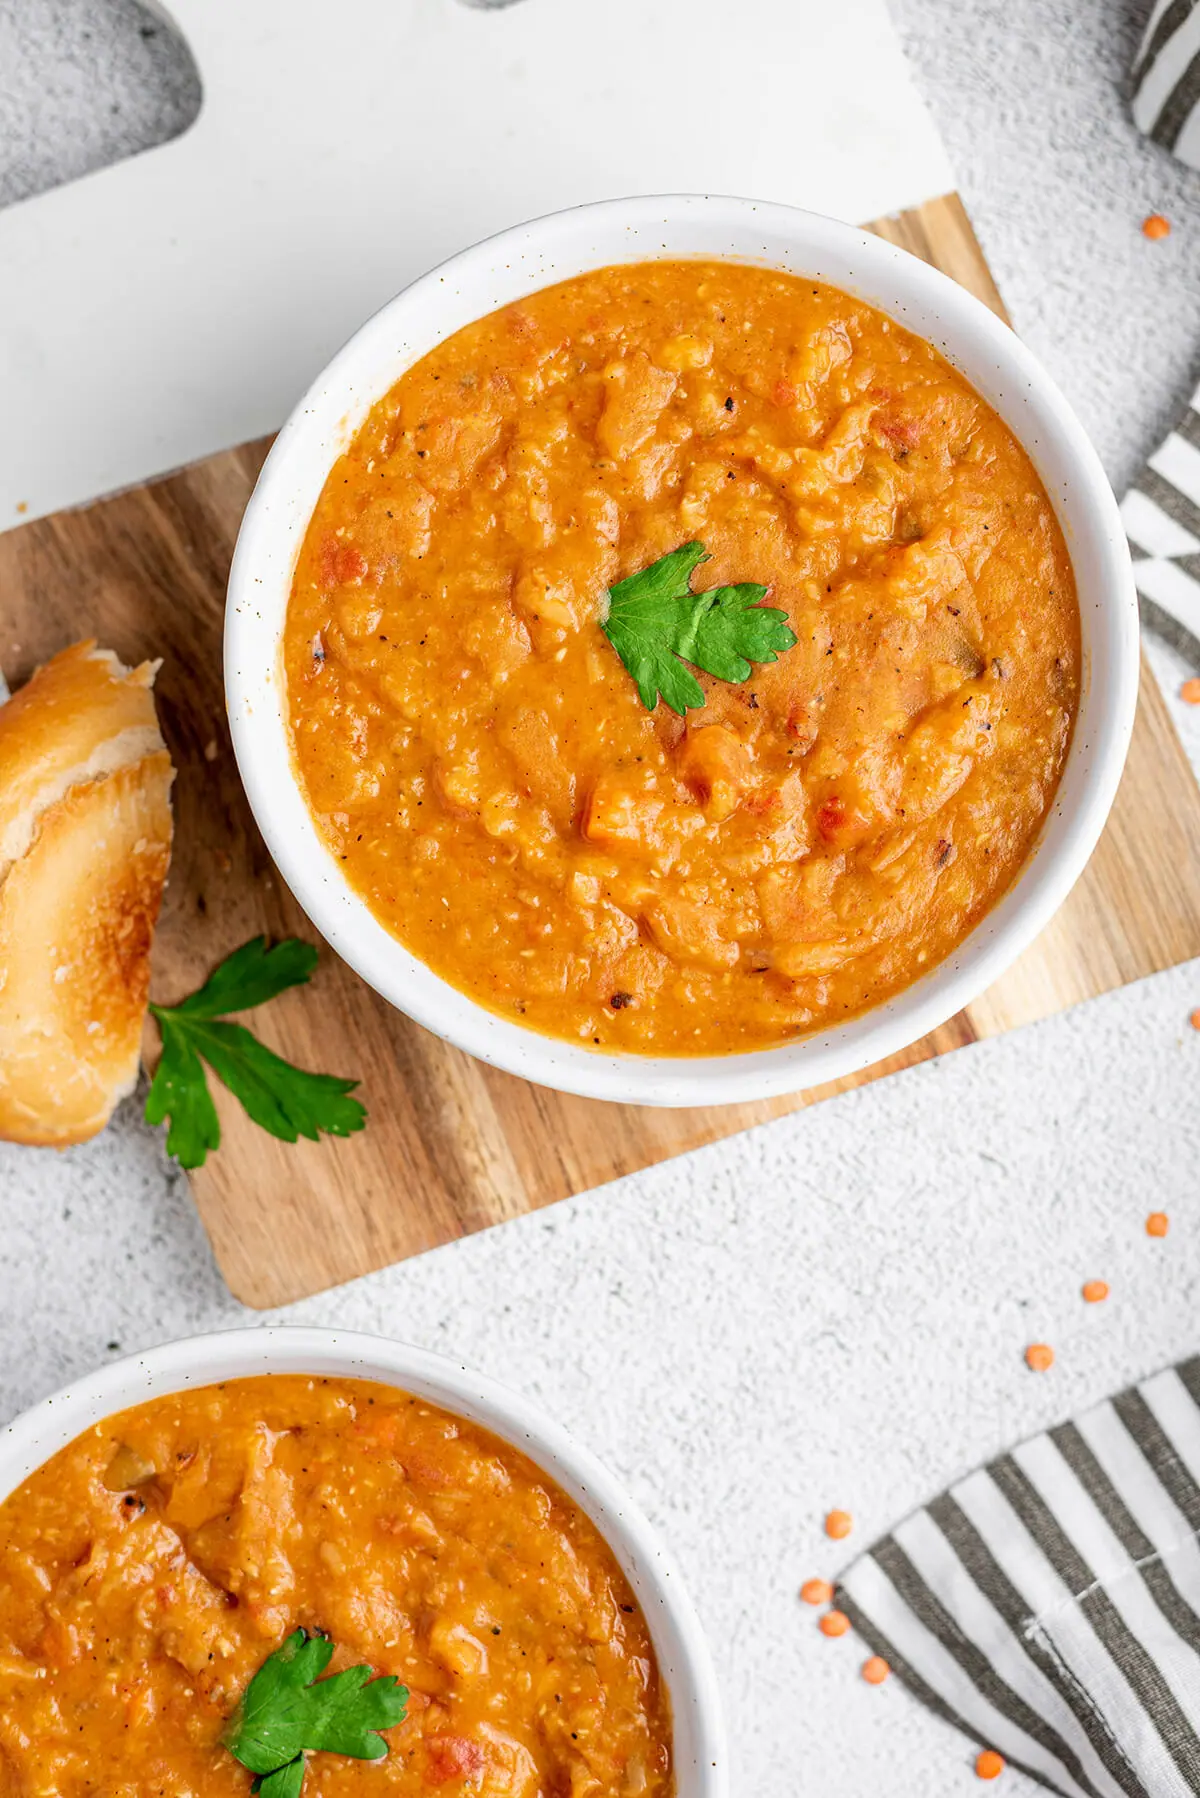 Recipe for Instant Pot red lentil soup